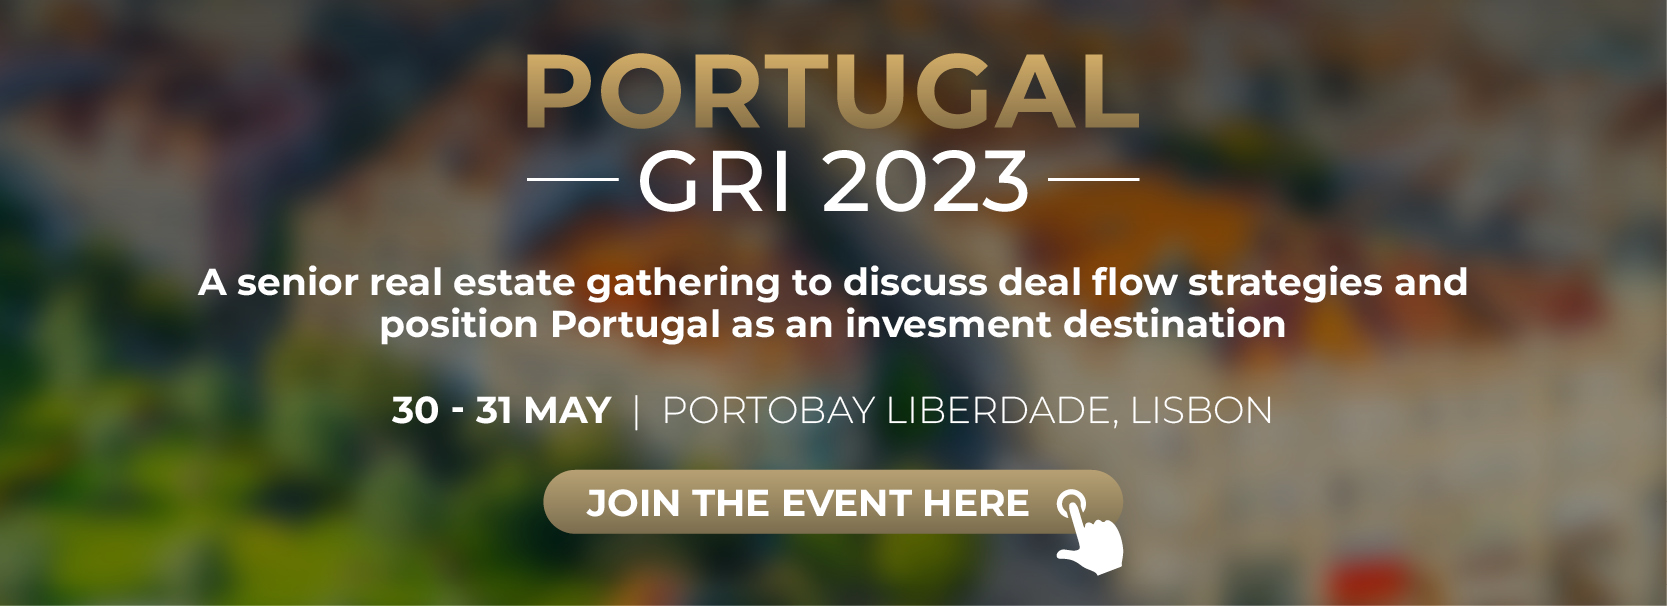 Portugal GRI 2023 